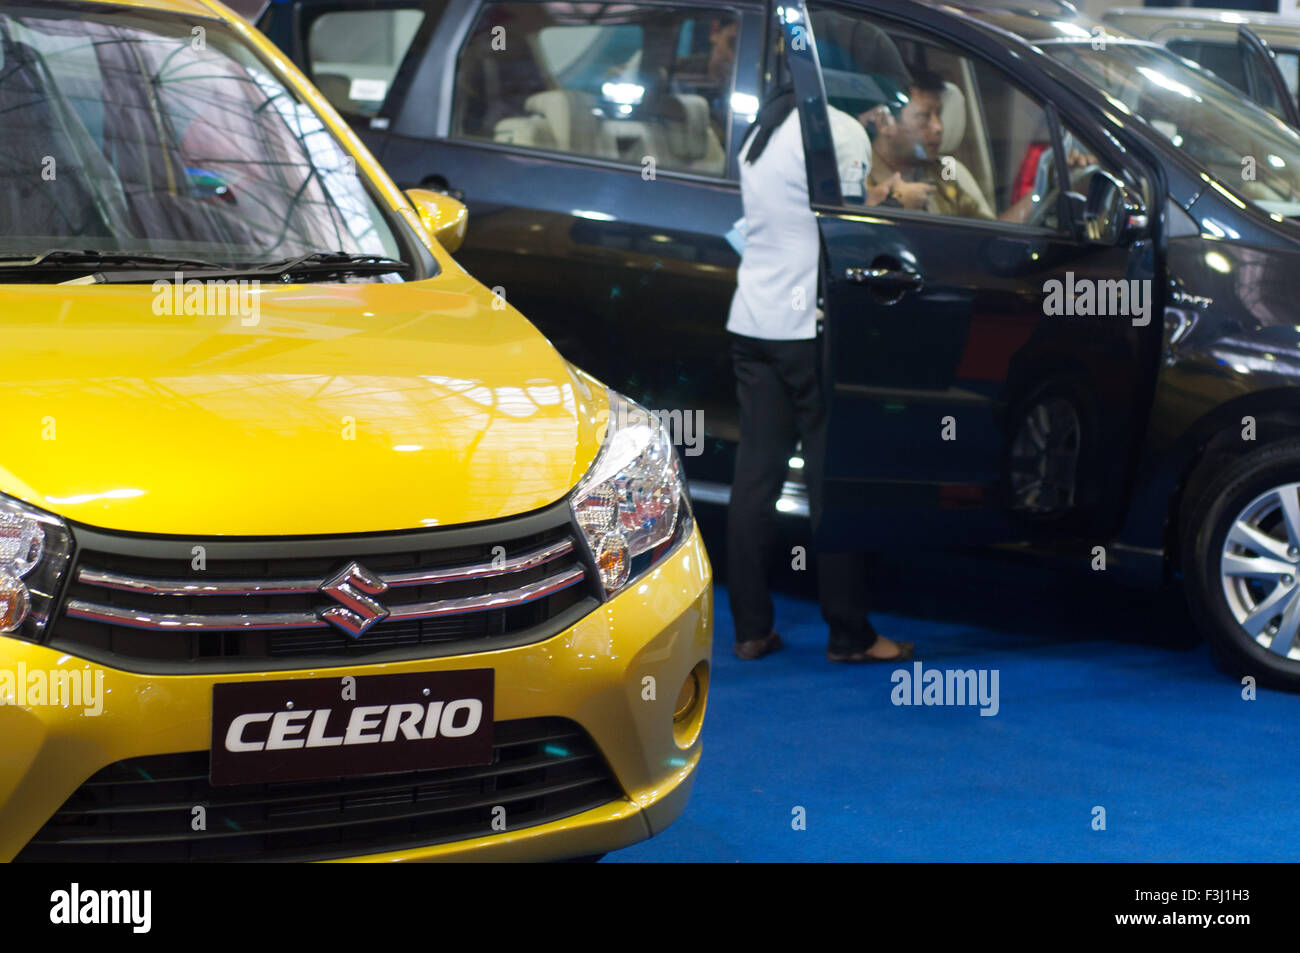 Suzuki Celero in an autoshow. Stock Photo